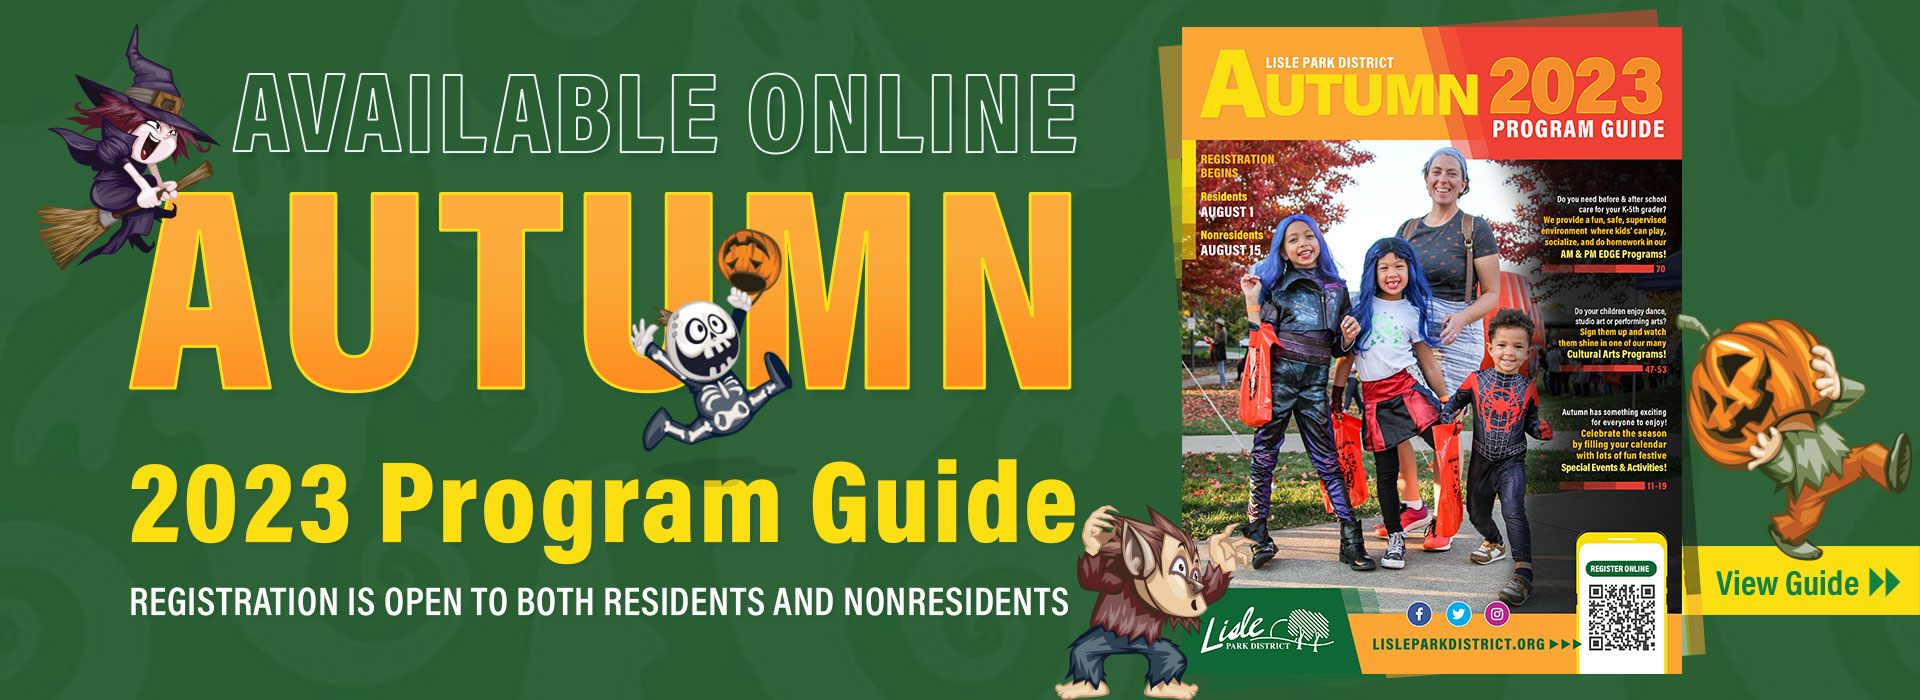 Autumn 2023 Program Guide